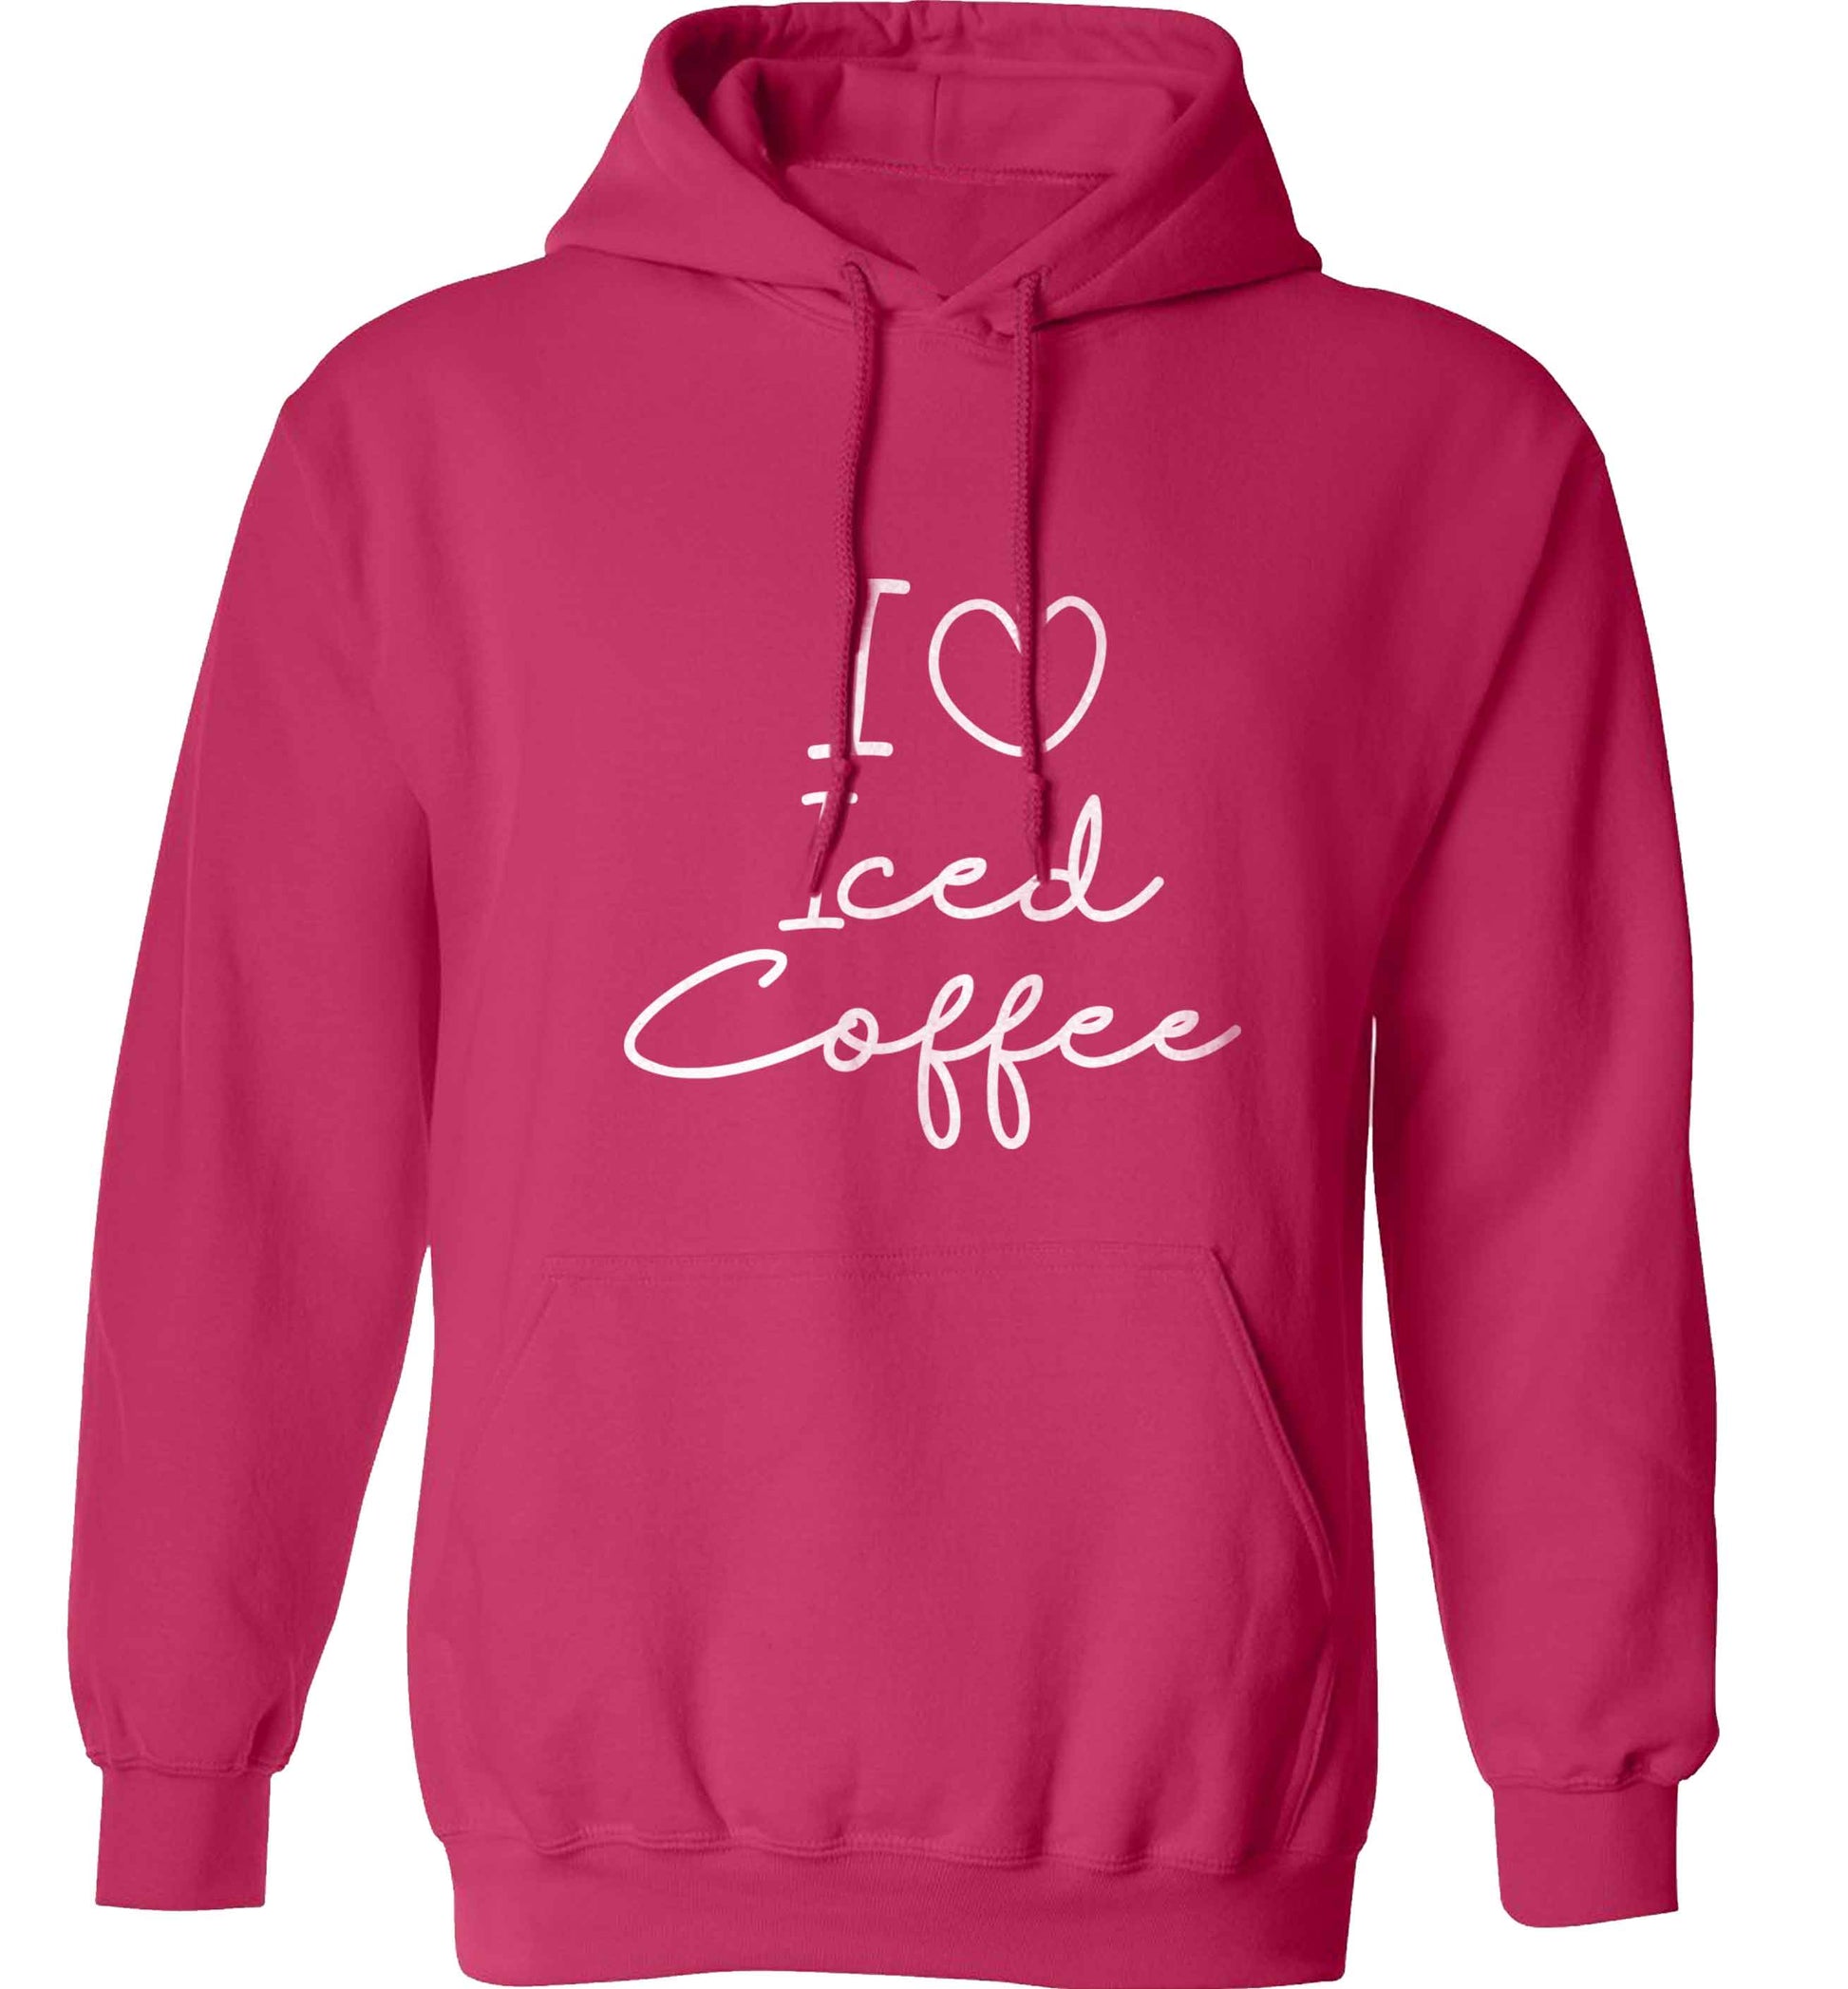 I love iced coffee adults unisex pink hoodie 2XL